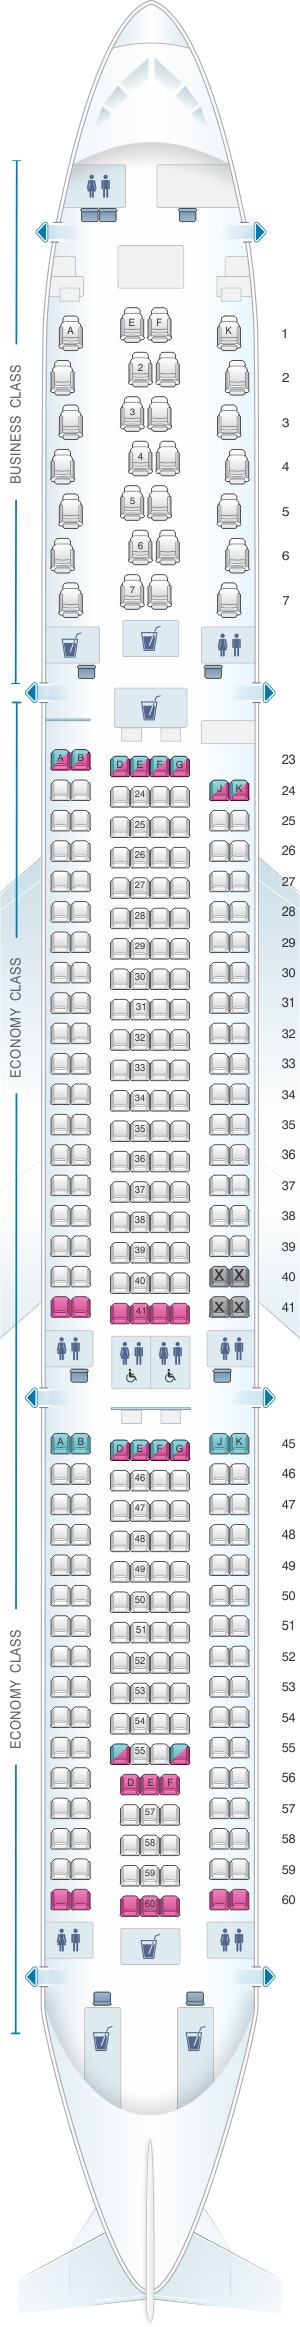 Seat Map And Seating Chart Airbus A330 300 Korean Air 272 Seats